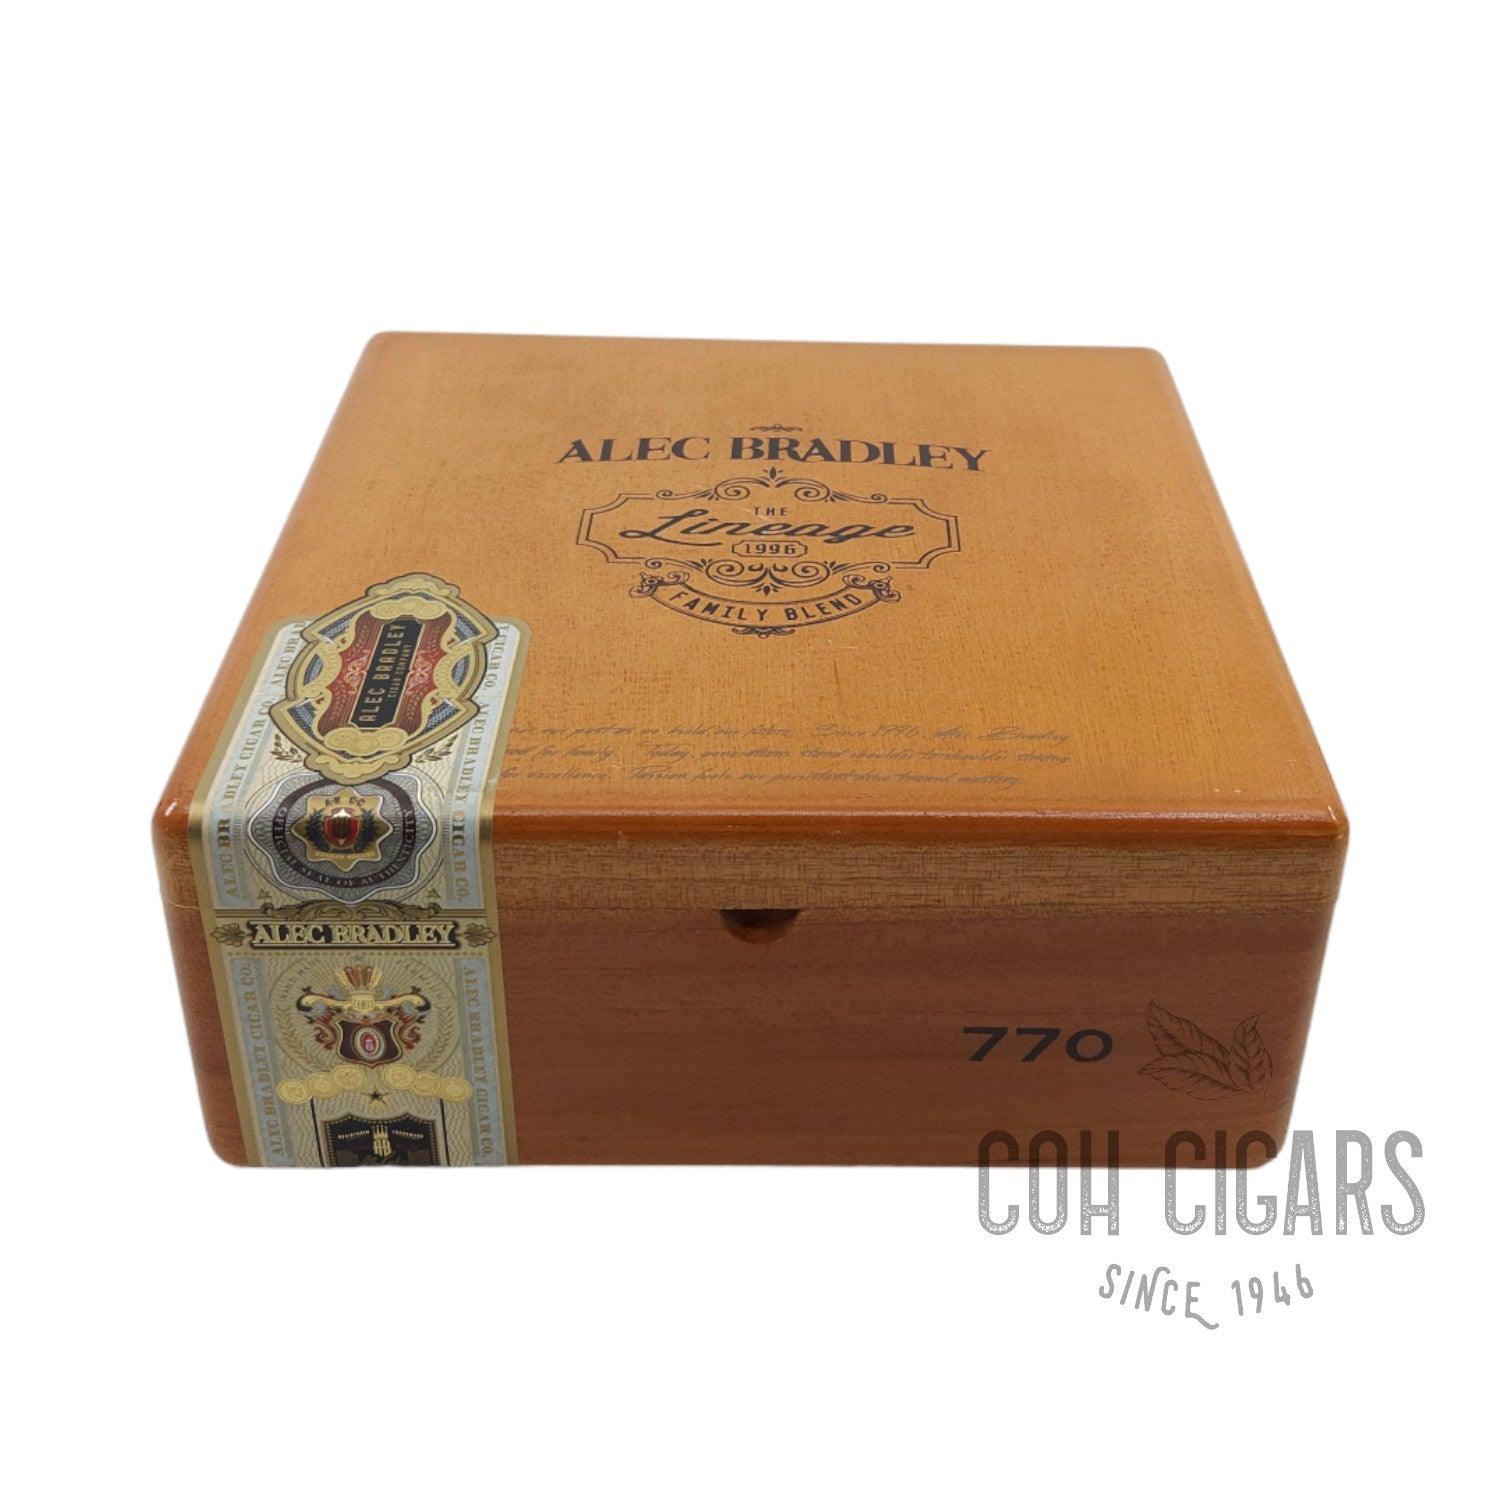 Alec Bradley Cigar | The Lineage Family Blend 770 | Box 20 - hk.cohcigars